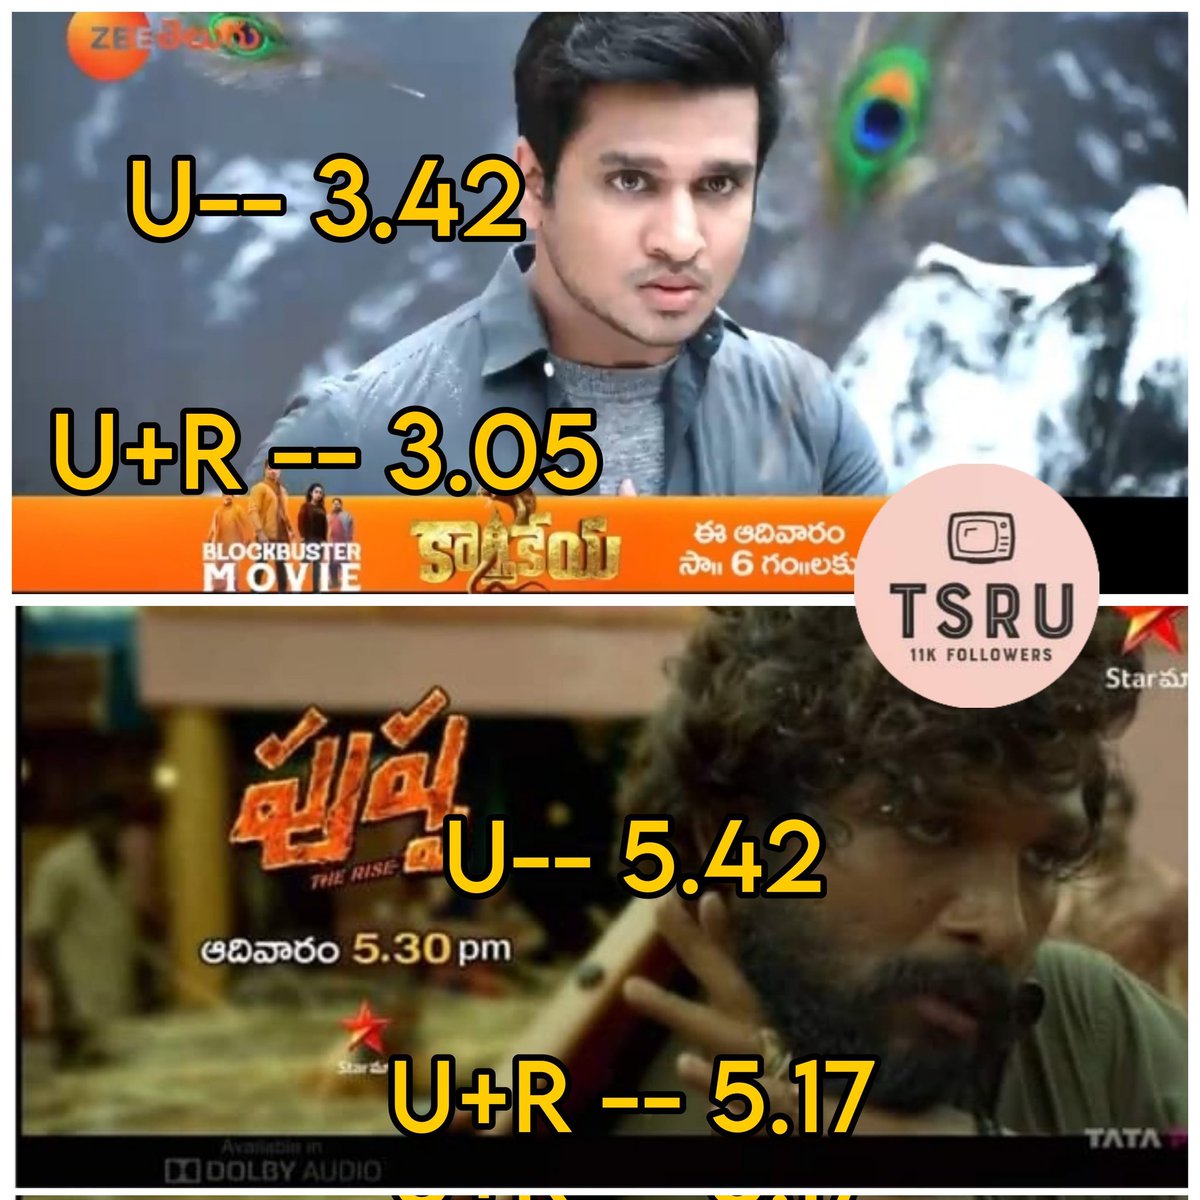 Last Sunday Prime time movies Ratings :

#AlluArjun #RashmikaMandanna Staring #PushpaTheRise 🔥Gets 5.42 TRP (U) & 5.17 (U+R) Markets on #StarMaa 

#Nikhil #anupamaparameshwaran staring Blockbuster #Karthikeya2 Gets 3.42 (U) & 3.05 (U+R) on #ZeeTelugu